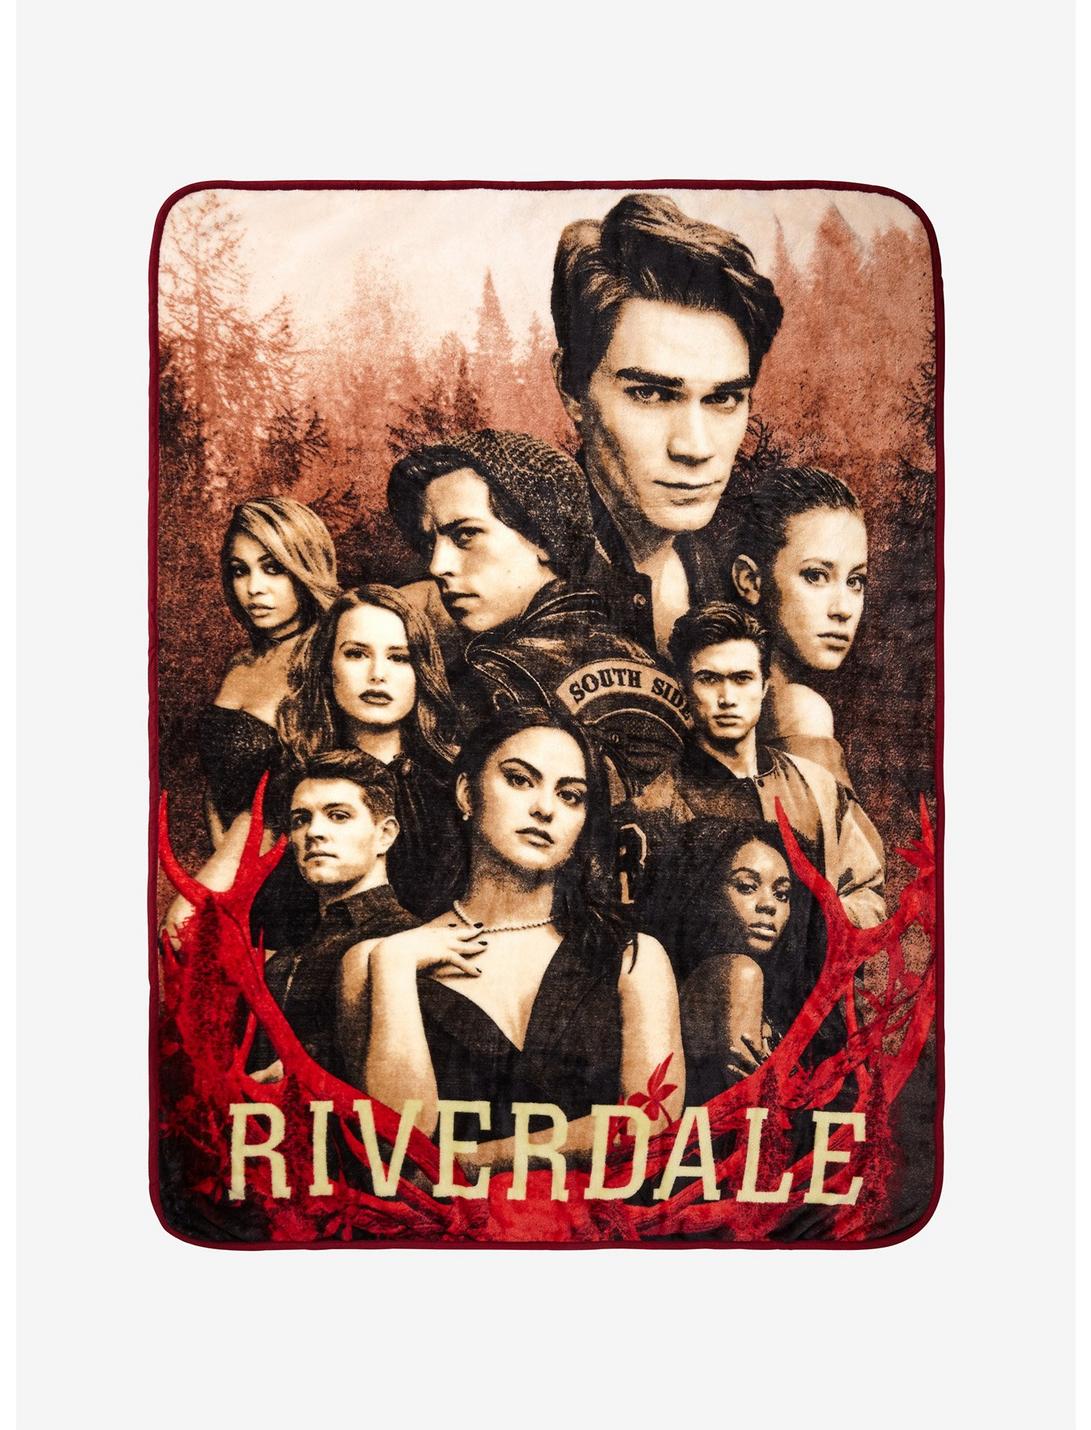 Riverdale Sepia Tone Cast Plush Throw Blanket Hot Topic Exclusive, , hi-res